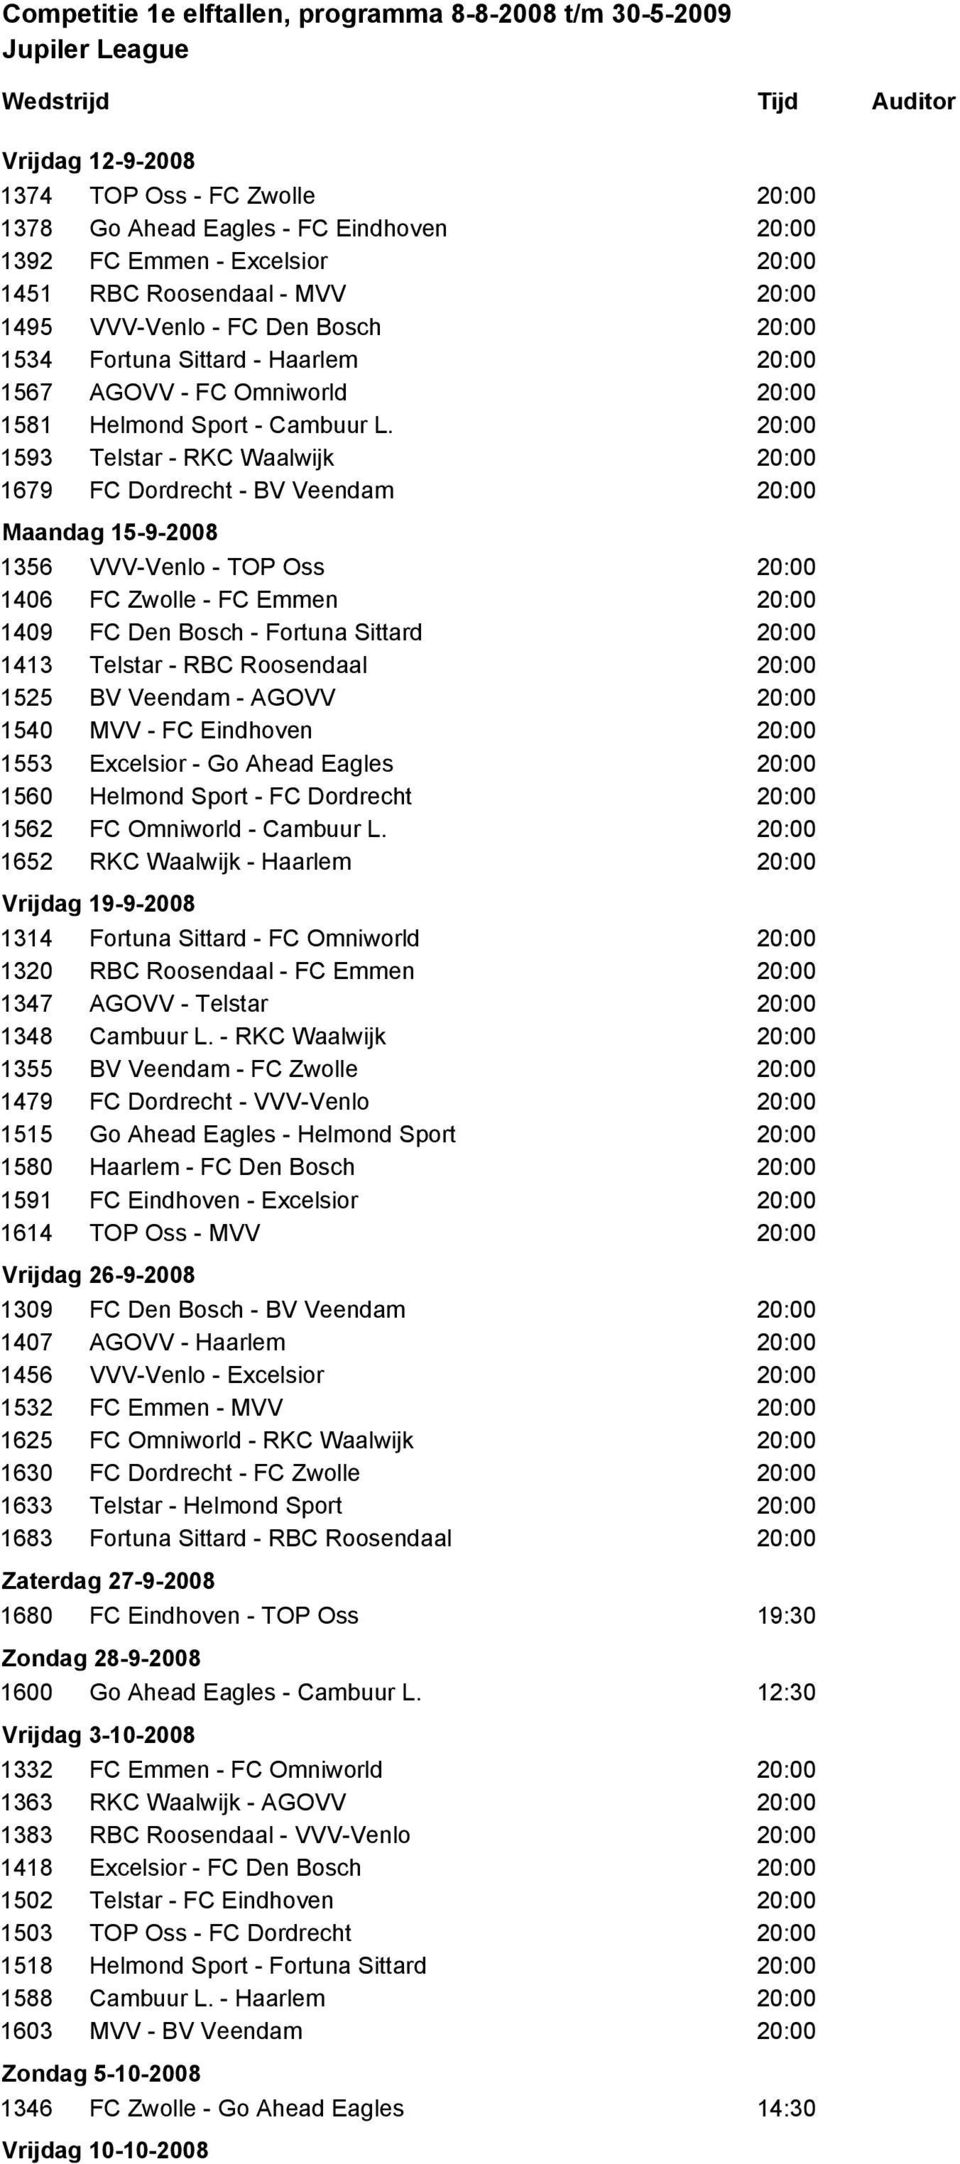 1593 Telstar - RKC Waalwijk 1679 FC Dordrecht - BV Veendam Maandag 15-9-2008 1356 VVV-Venlo - TOP Oss 1406 FC Zwolle - FC Emmen 1409 FC Den Bosch - Fortuna Sittard 1413 Telstar - RBC Roosendaal 1525